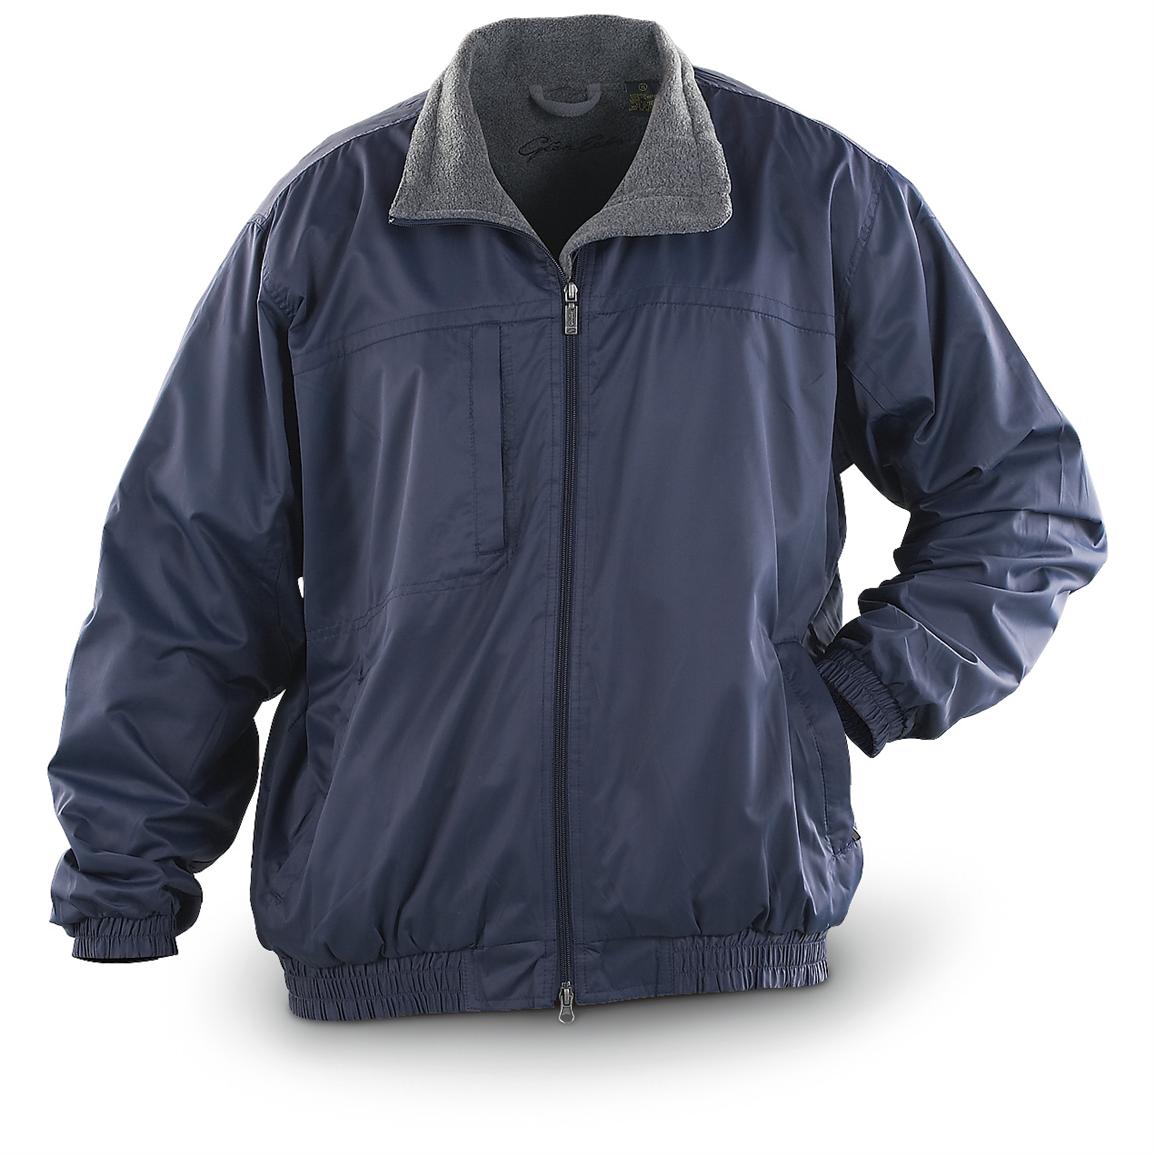 Glen Echo® Fleece - lined Jacket - 154195 Insulated Jackets